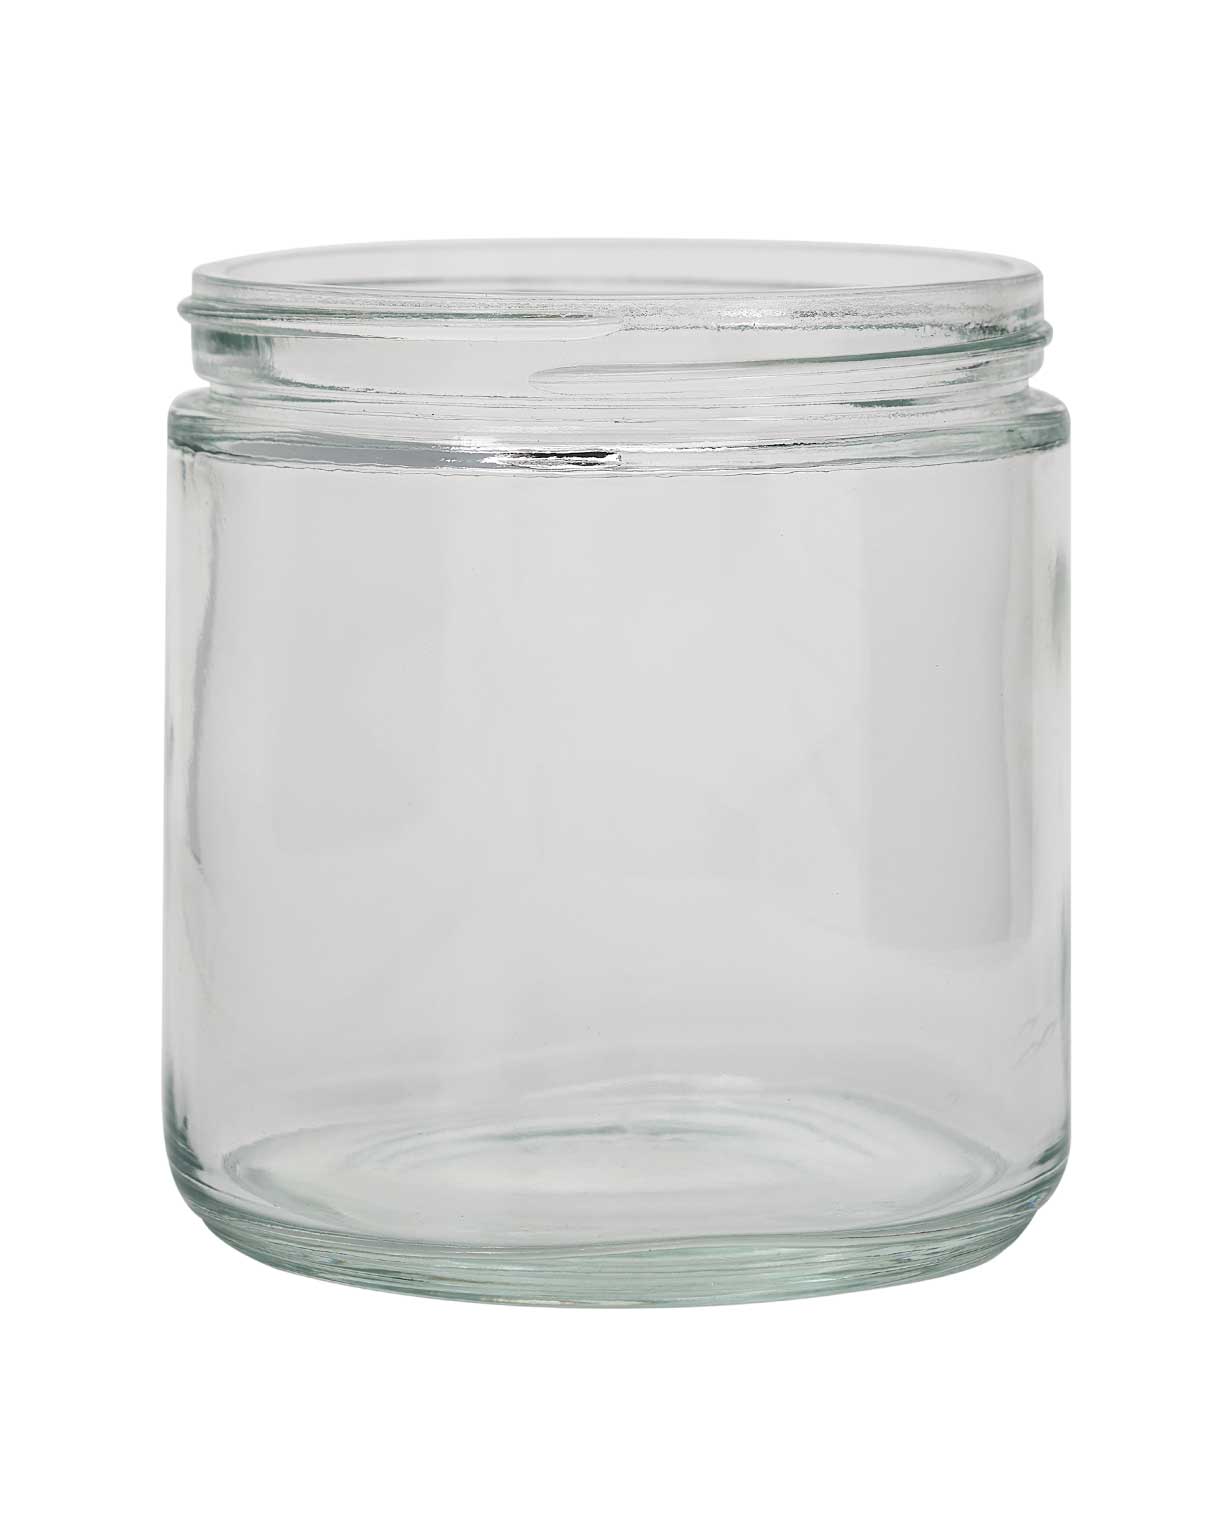 16 oz glass flint straight sided wide mouth jar 89-400